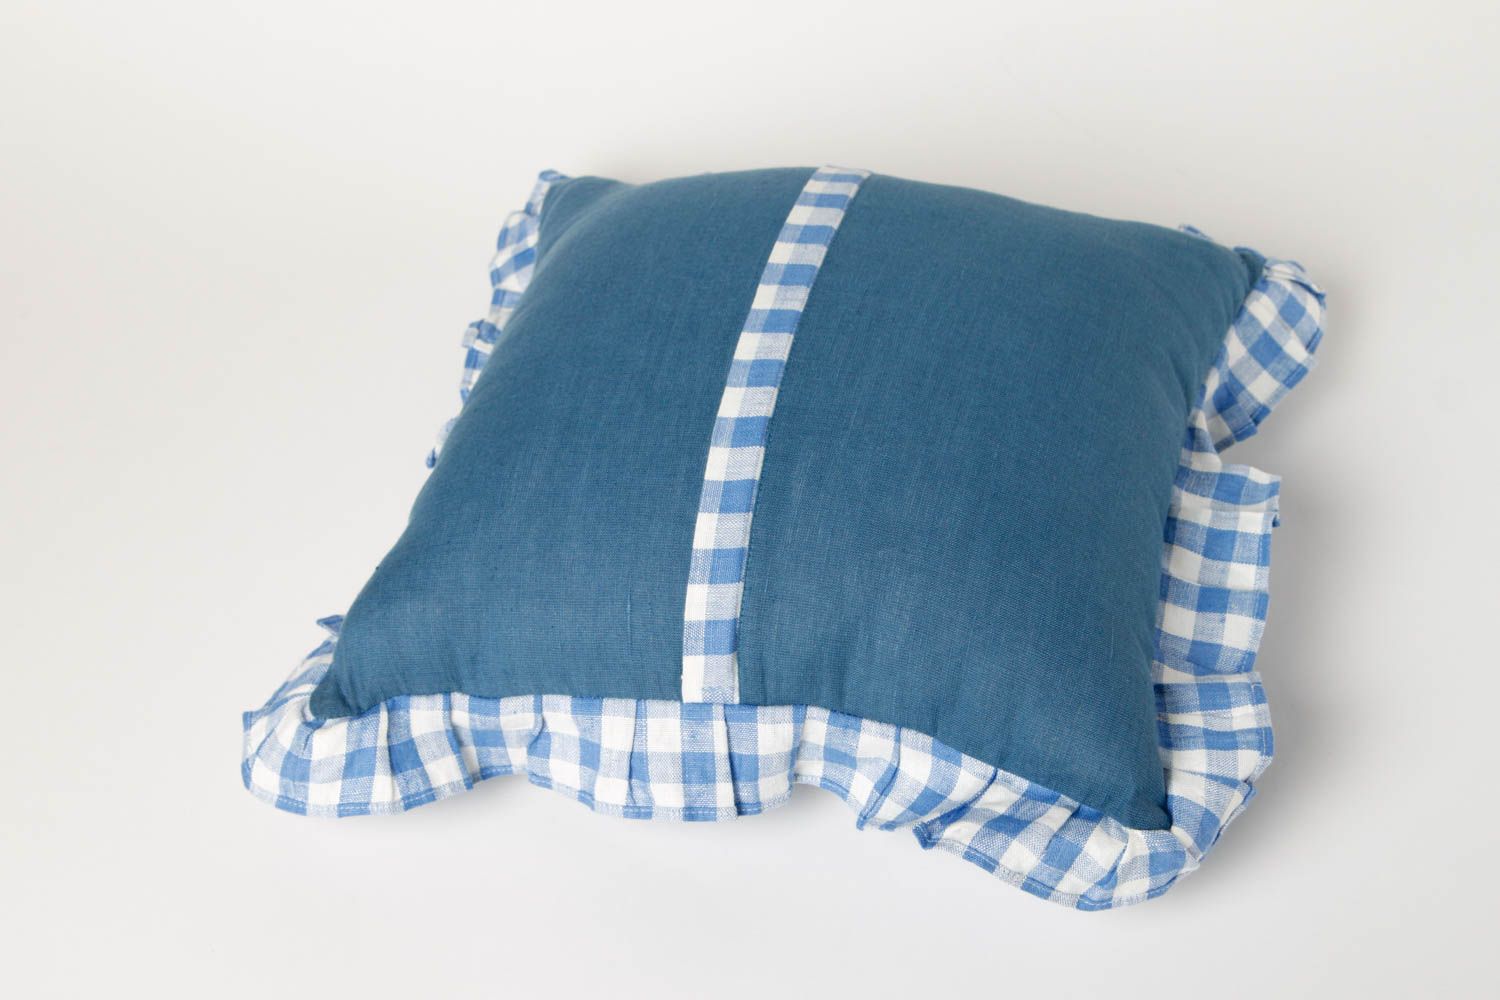 Stylish handmade throw pillow beautiful cushion ideas home textiles small gifts photo 4